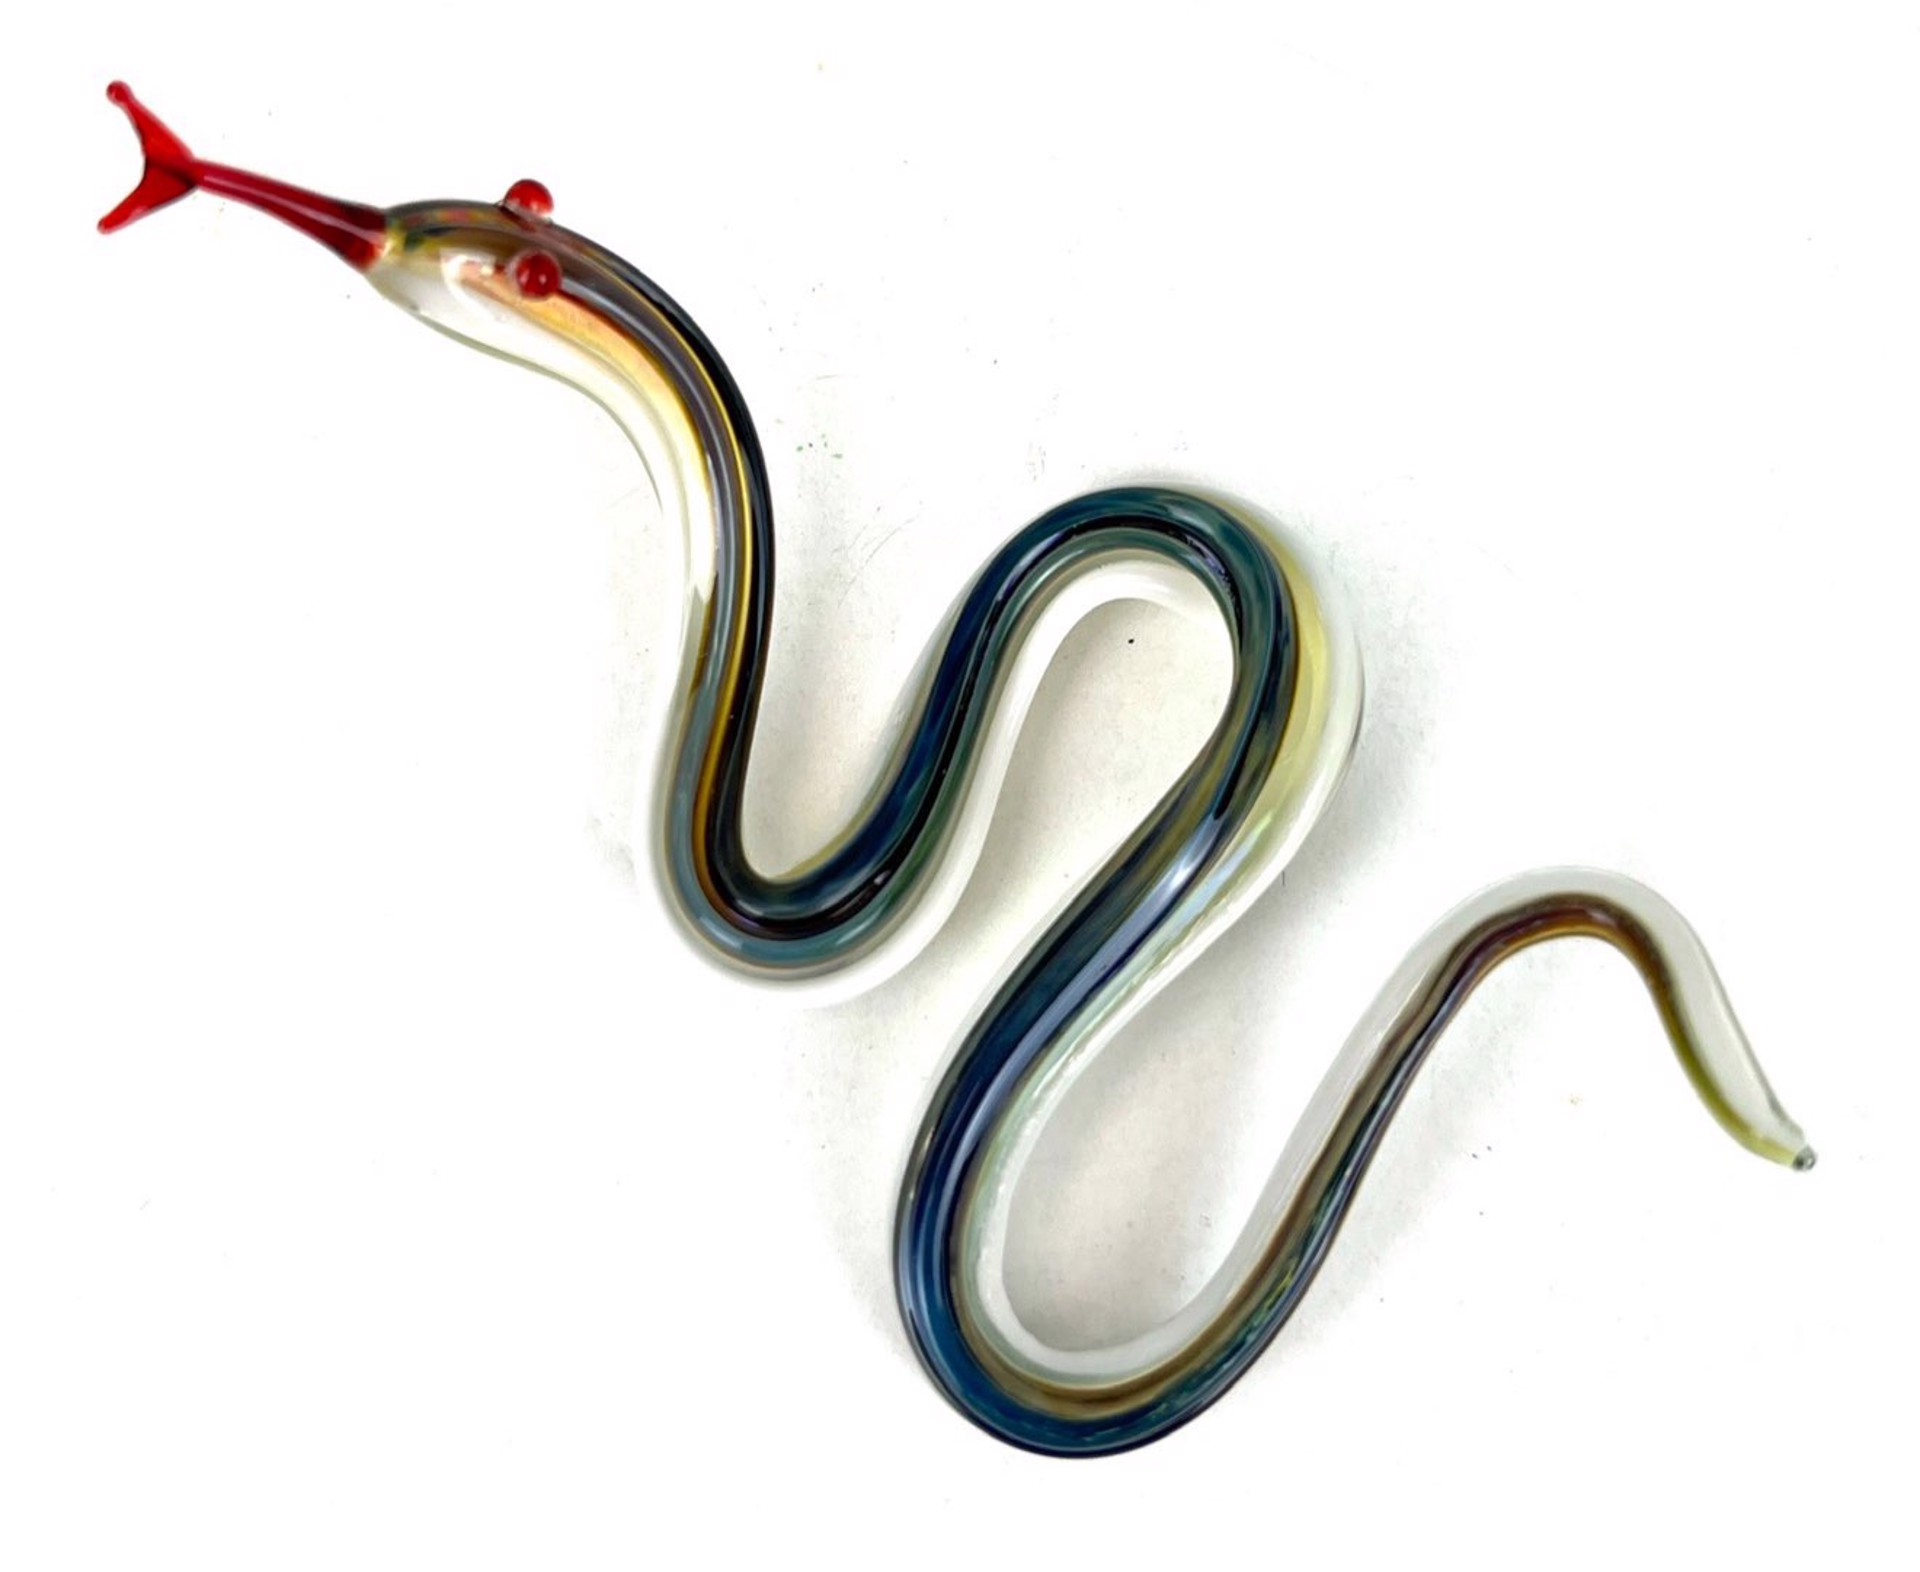 Snake by Loy Allen